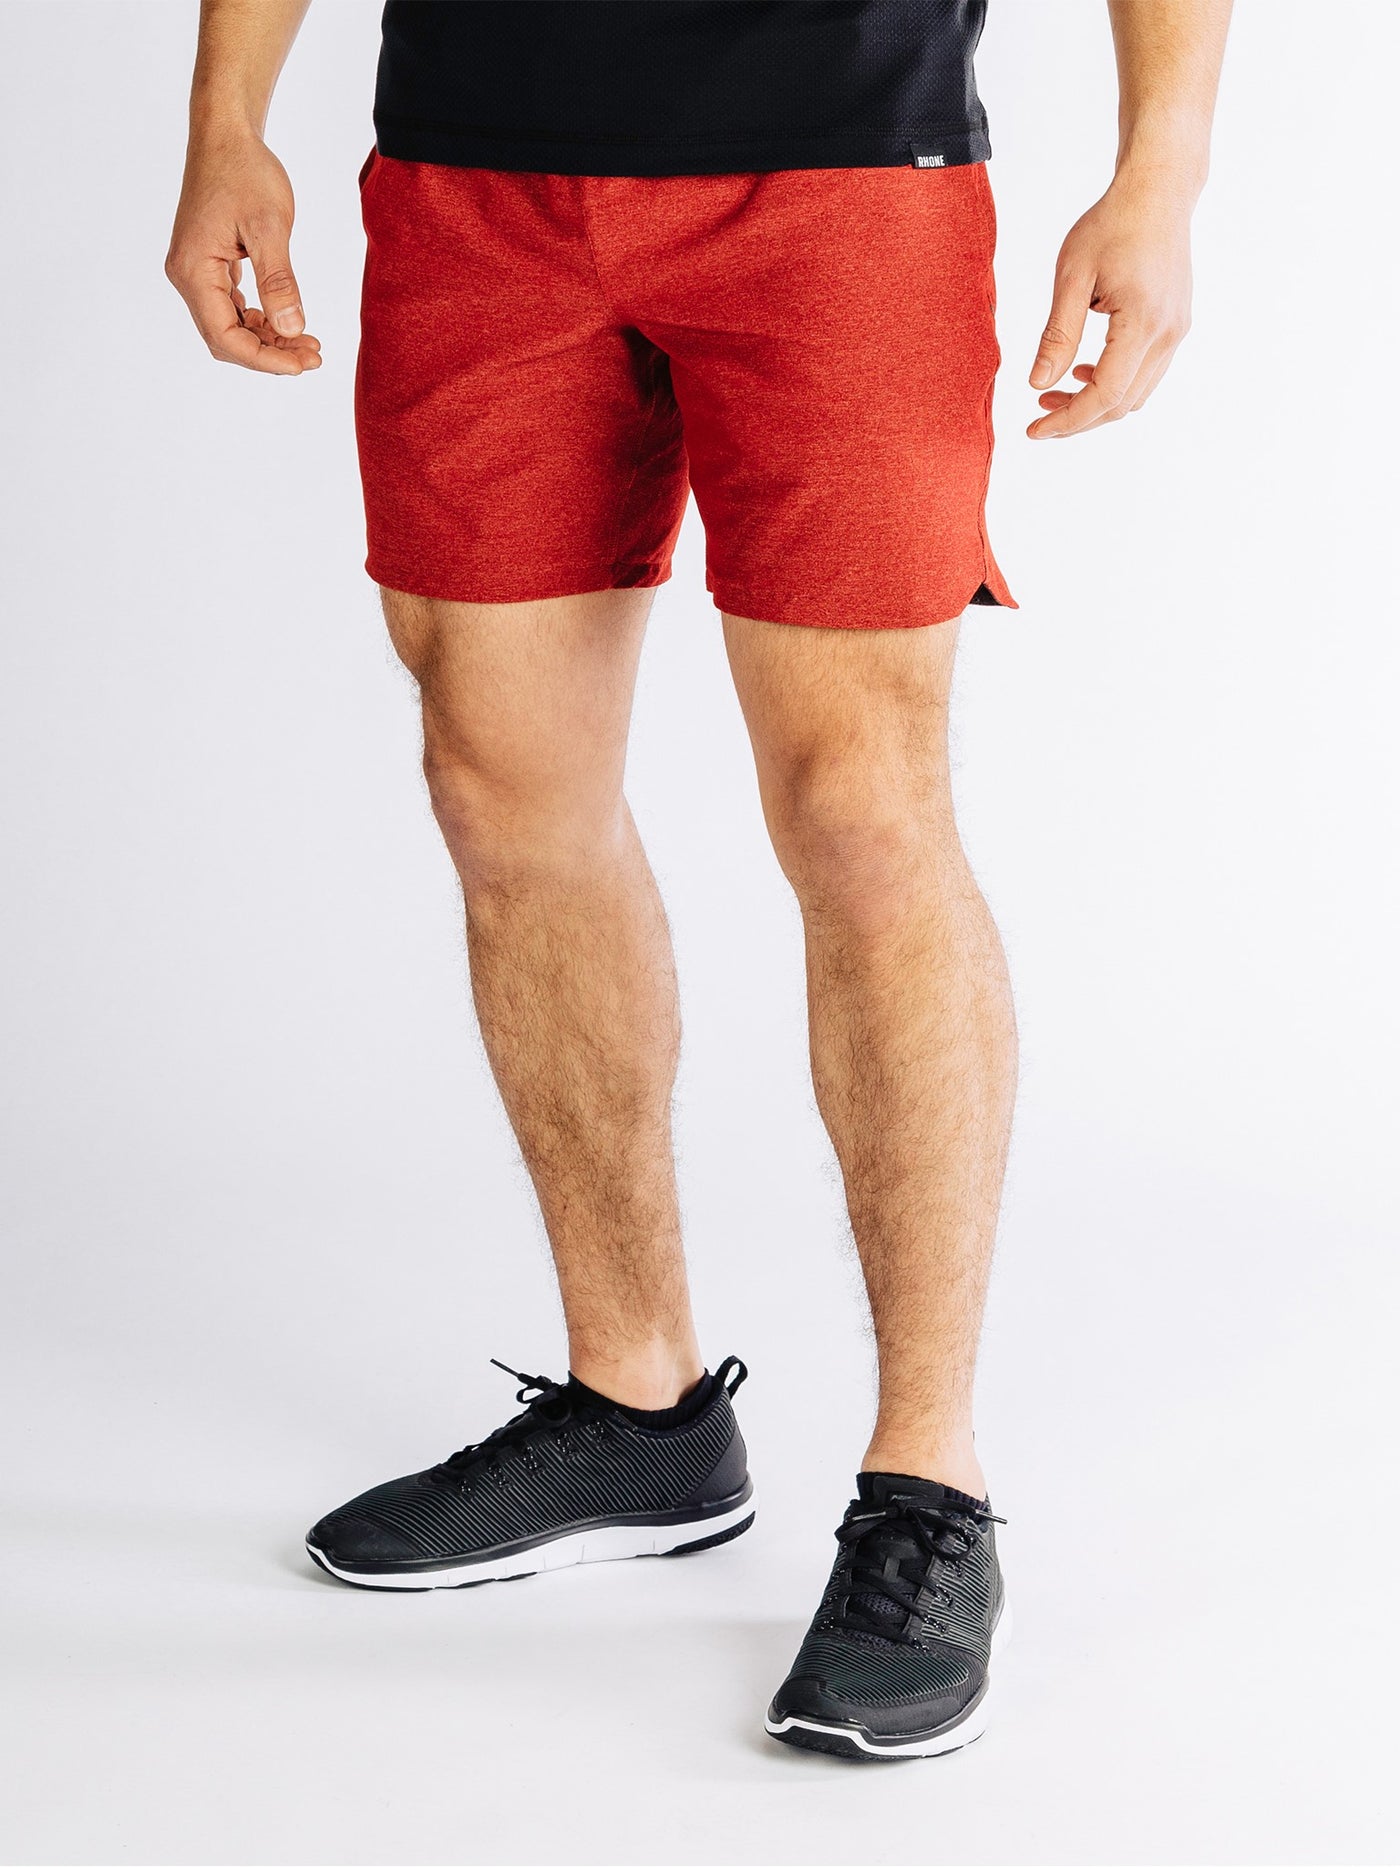 RHONE Guru 7" Unlined Yoga Shorts Men's Gym Shorts Red - Activemen Clothing